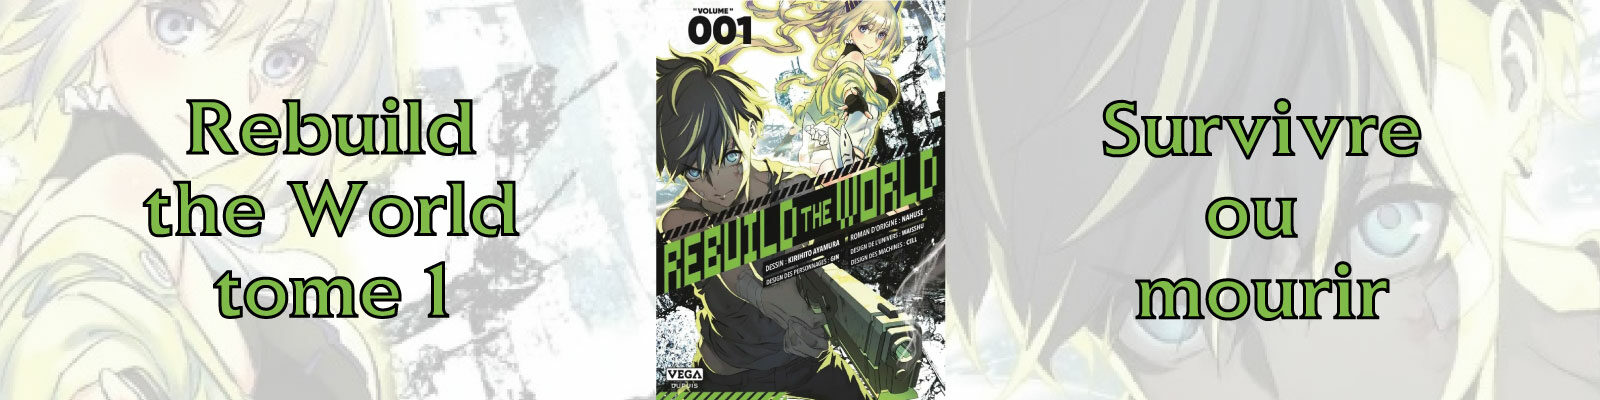 Rebuild the World-tome-1---survivre-ou-mourir